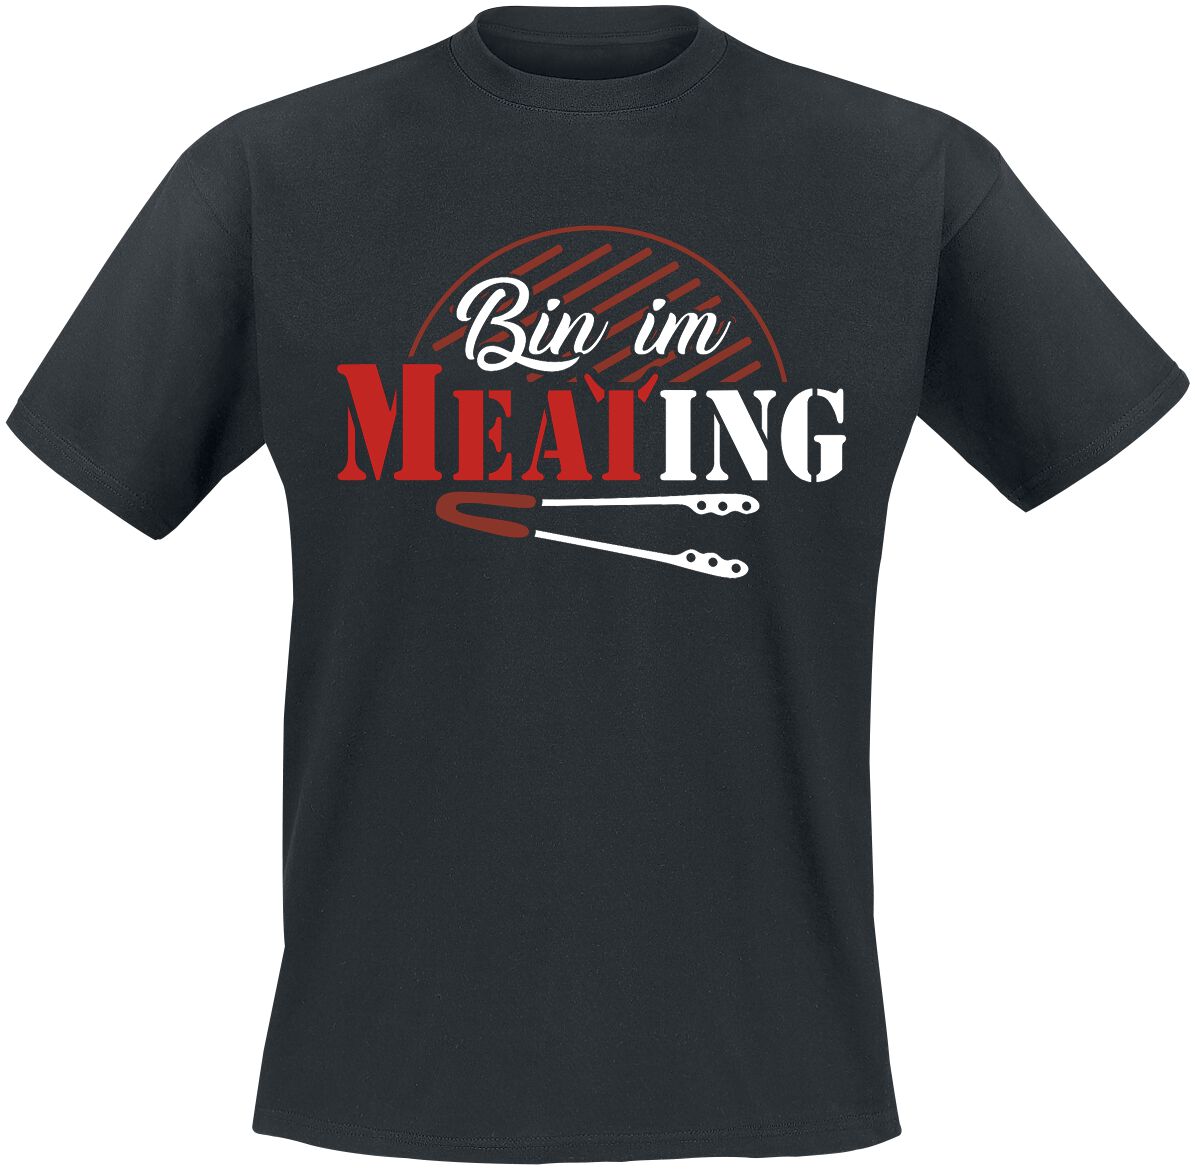 Food Bin im Meating T-Shirt schwarz in 4XL